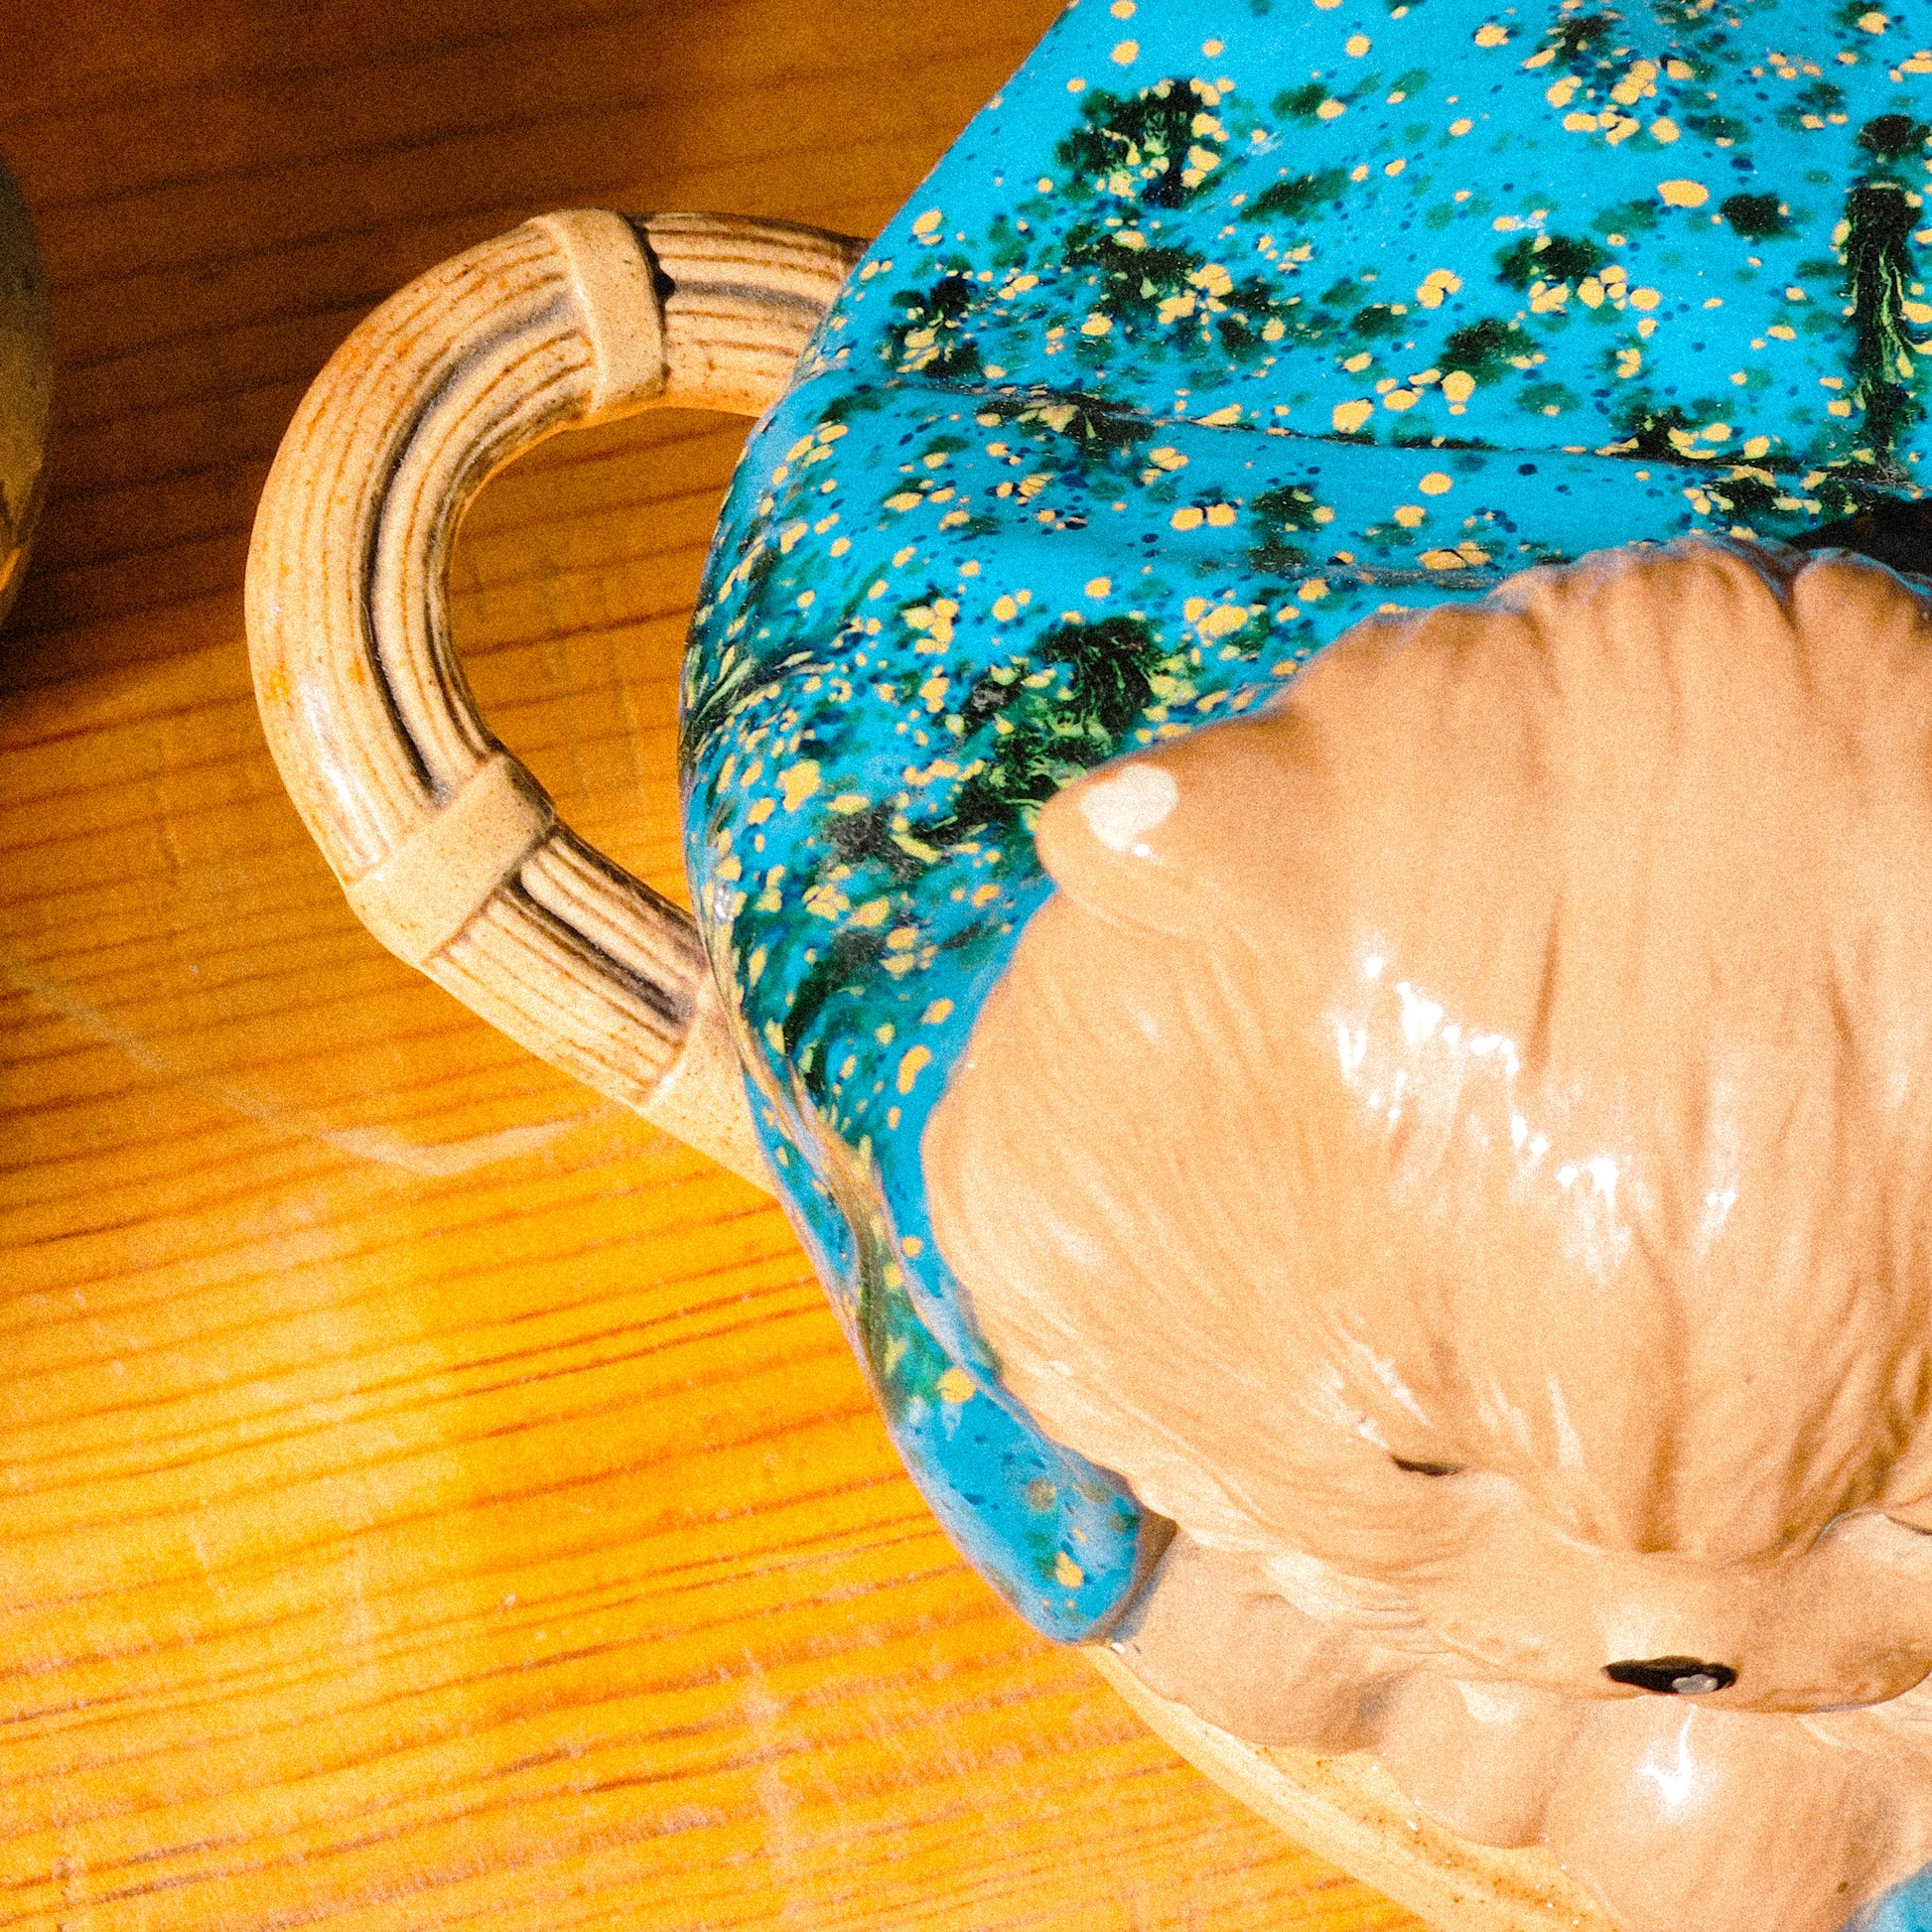 Large Vintage Ceramic Kitten Cookie Jar - Reclaimed Mt. Goods